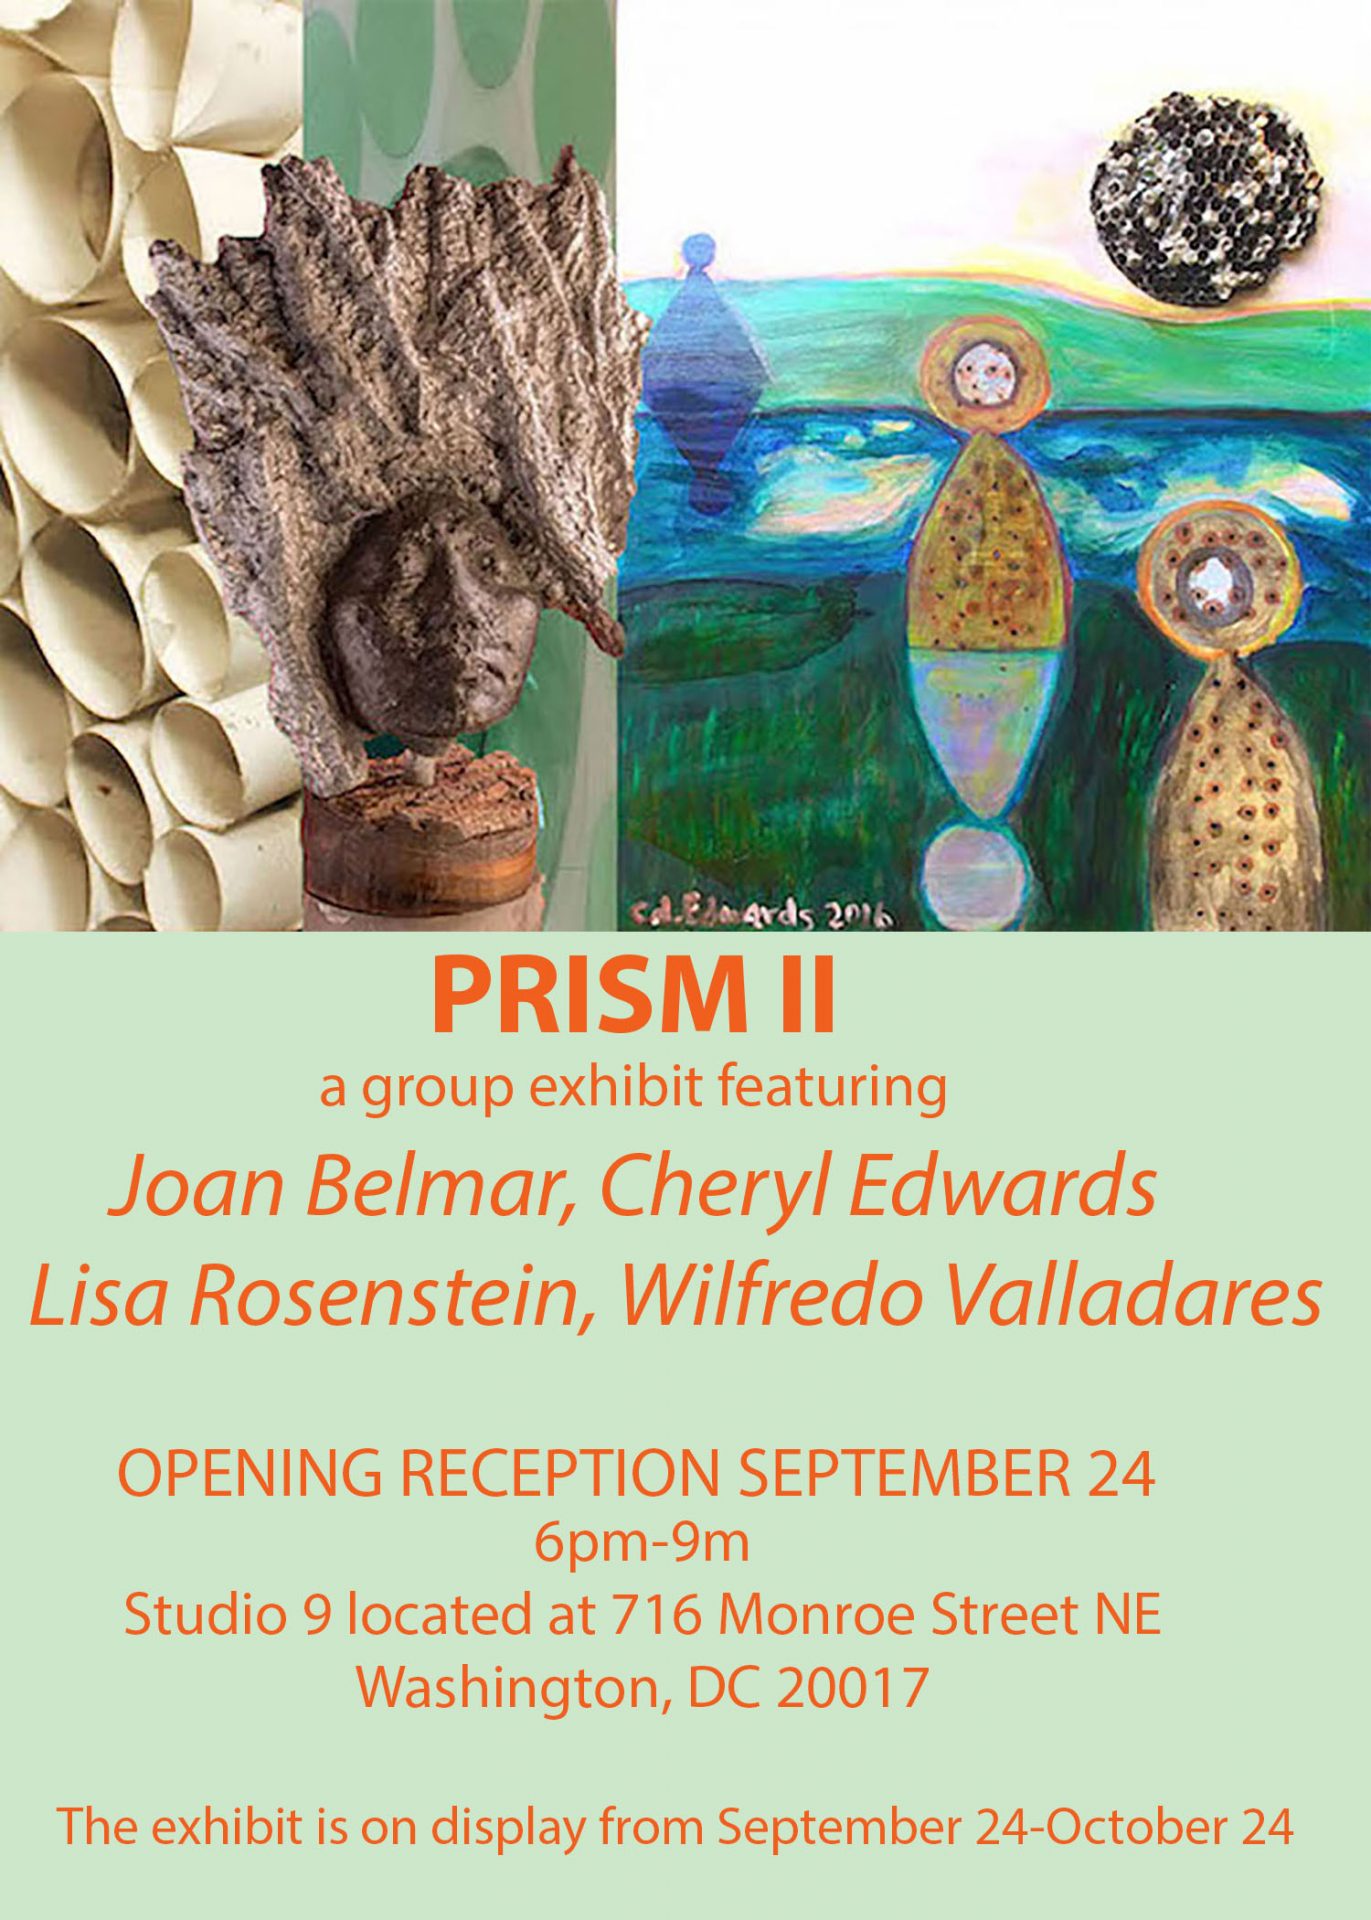 Cheryl Edwards Studio: Prism II - Group Exhibit